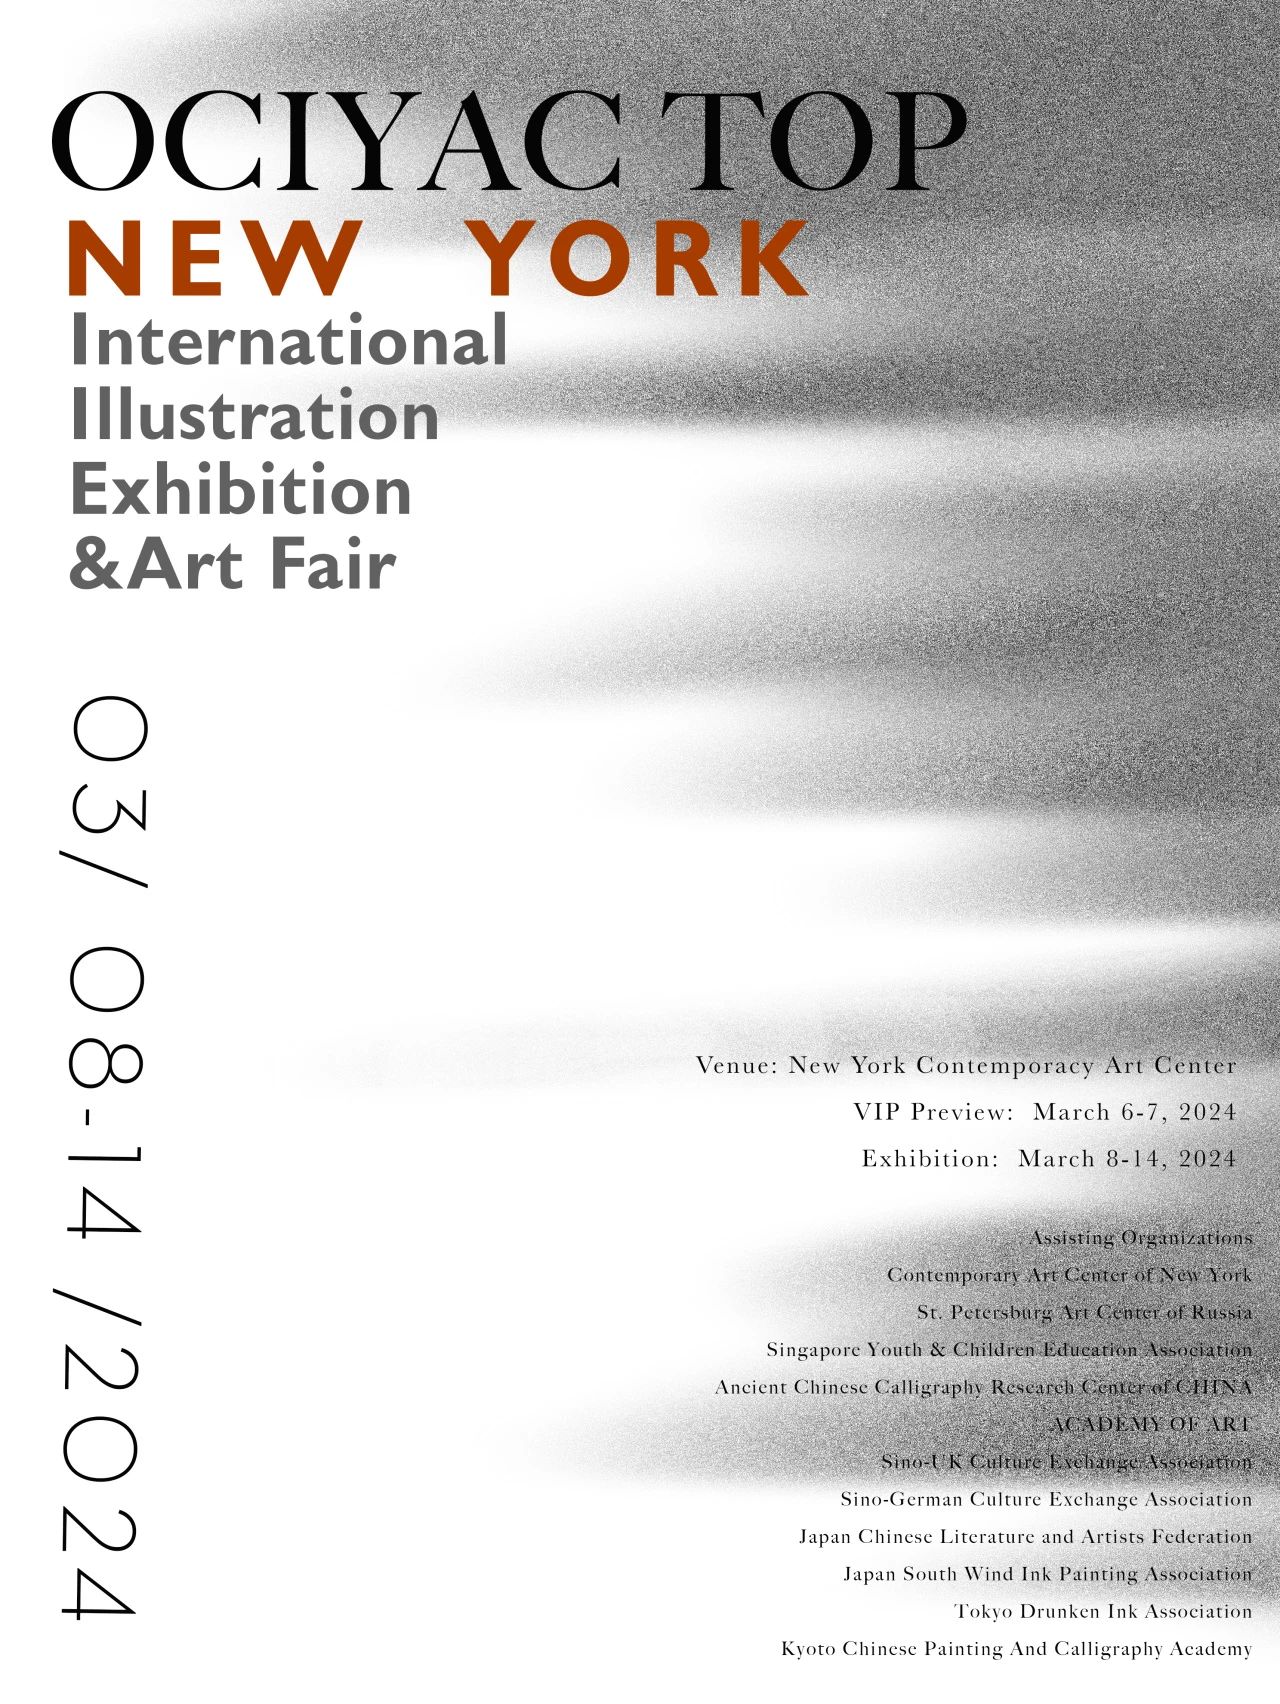 2024 OCIYAC New York International Illustration Exhibition